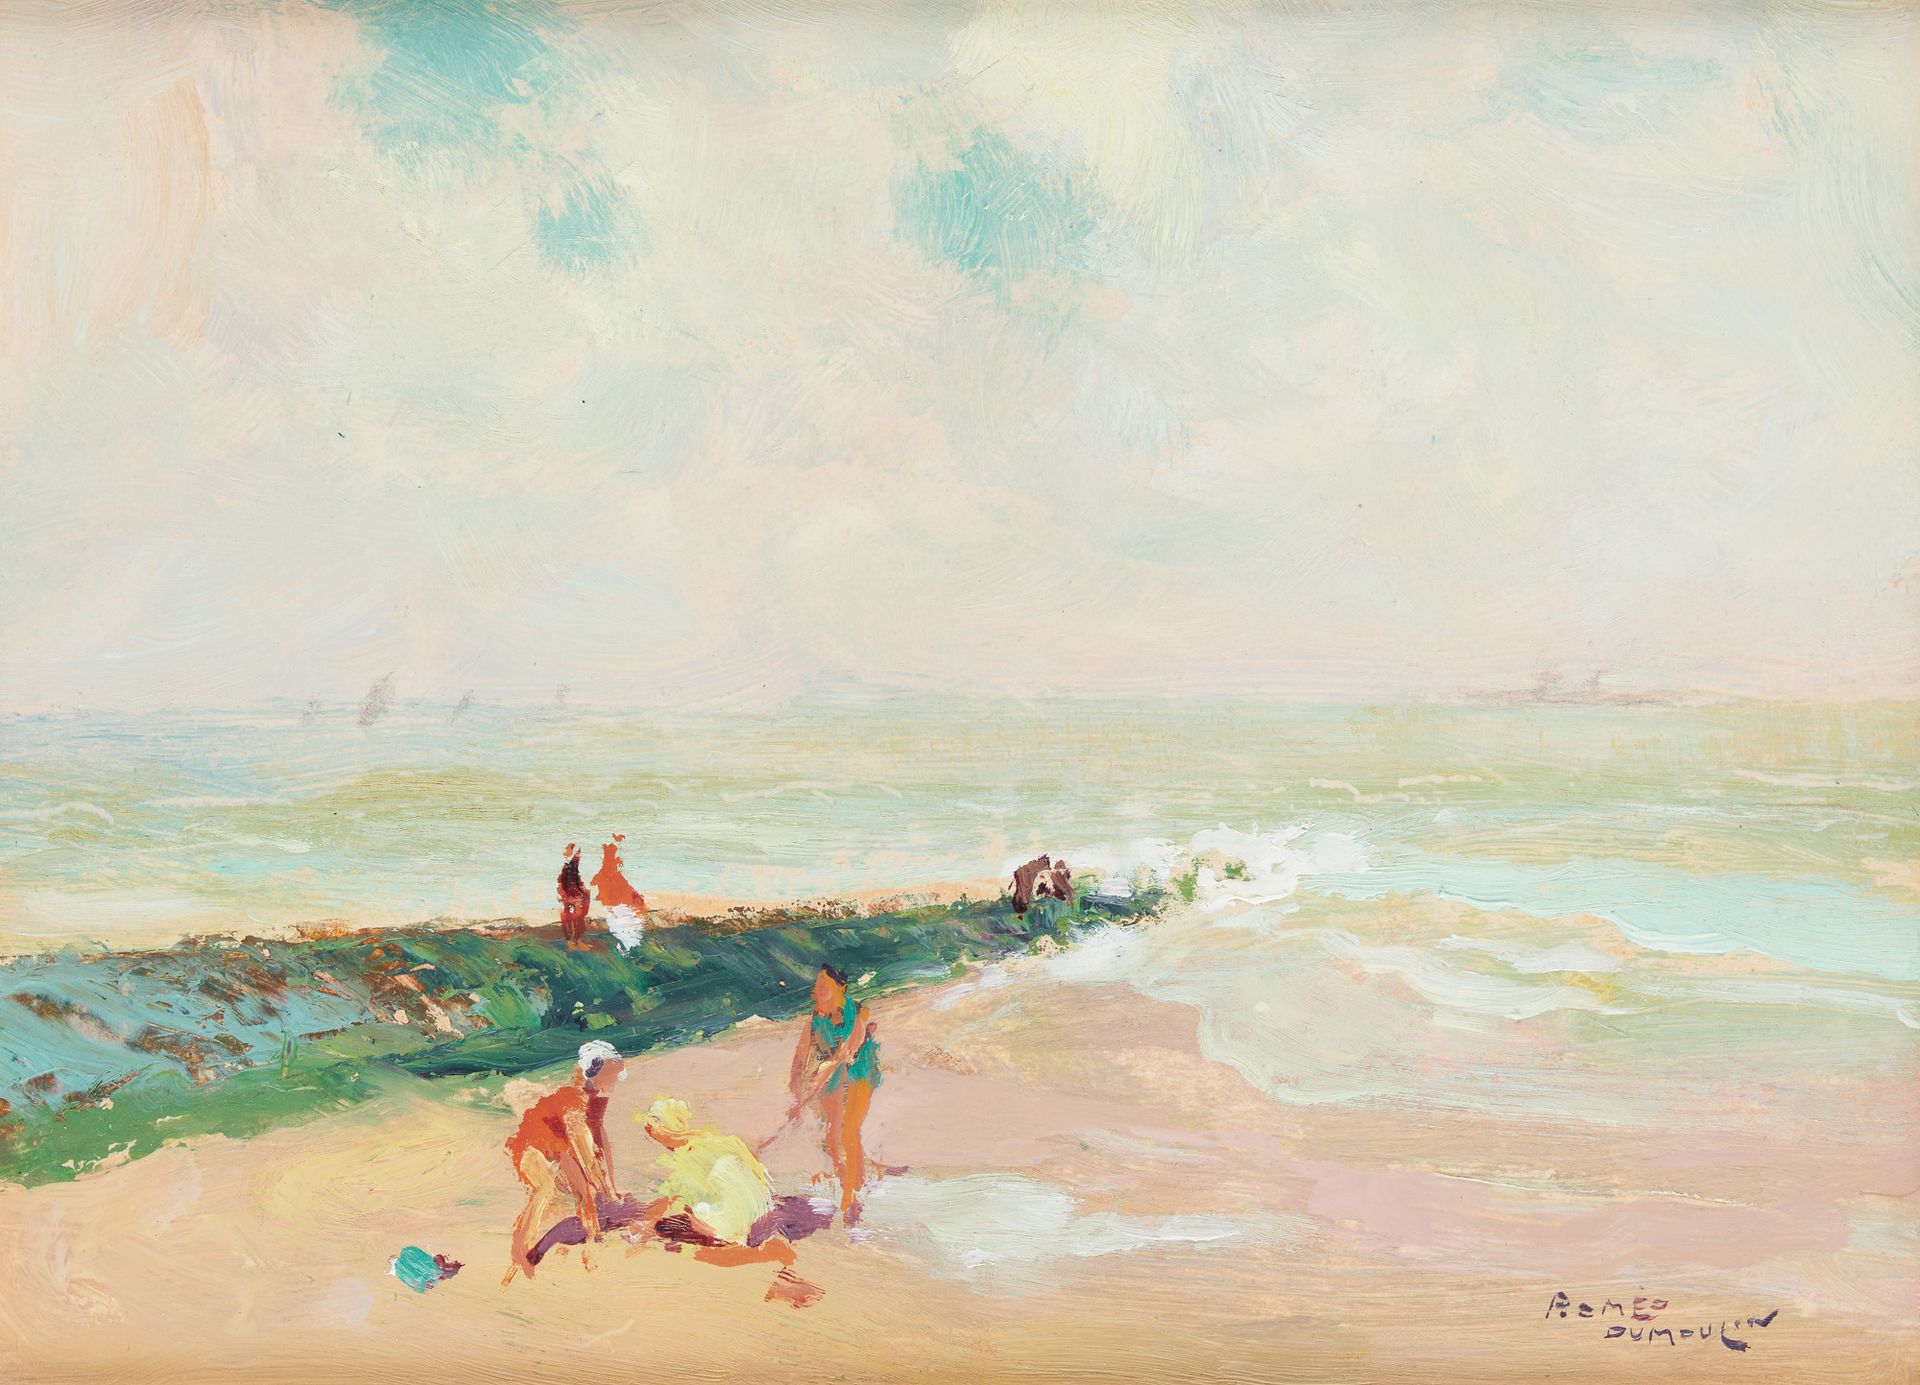 Romeo DUMOULIN École belge (1883-1944) Oil on panel: "The beach".

Signed: Roméo&hellip;